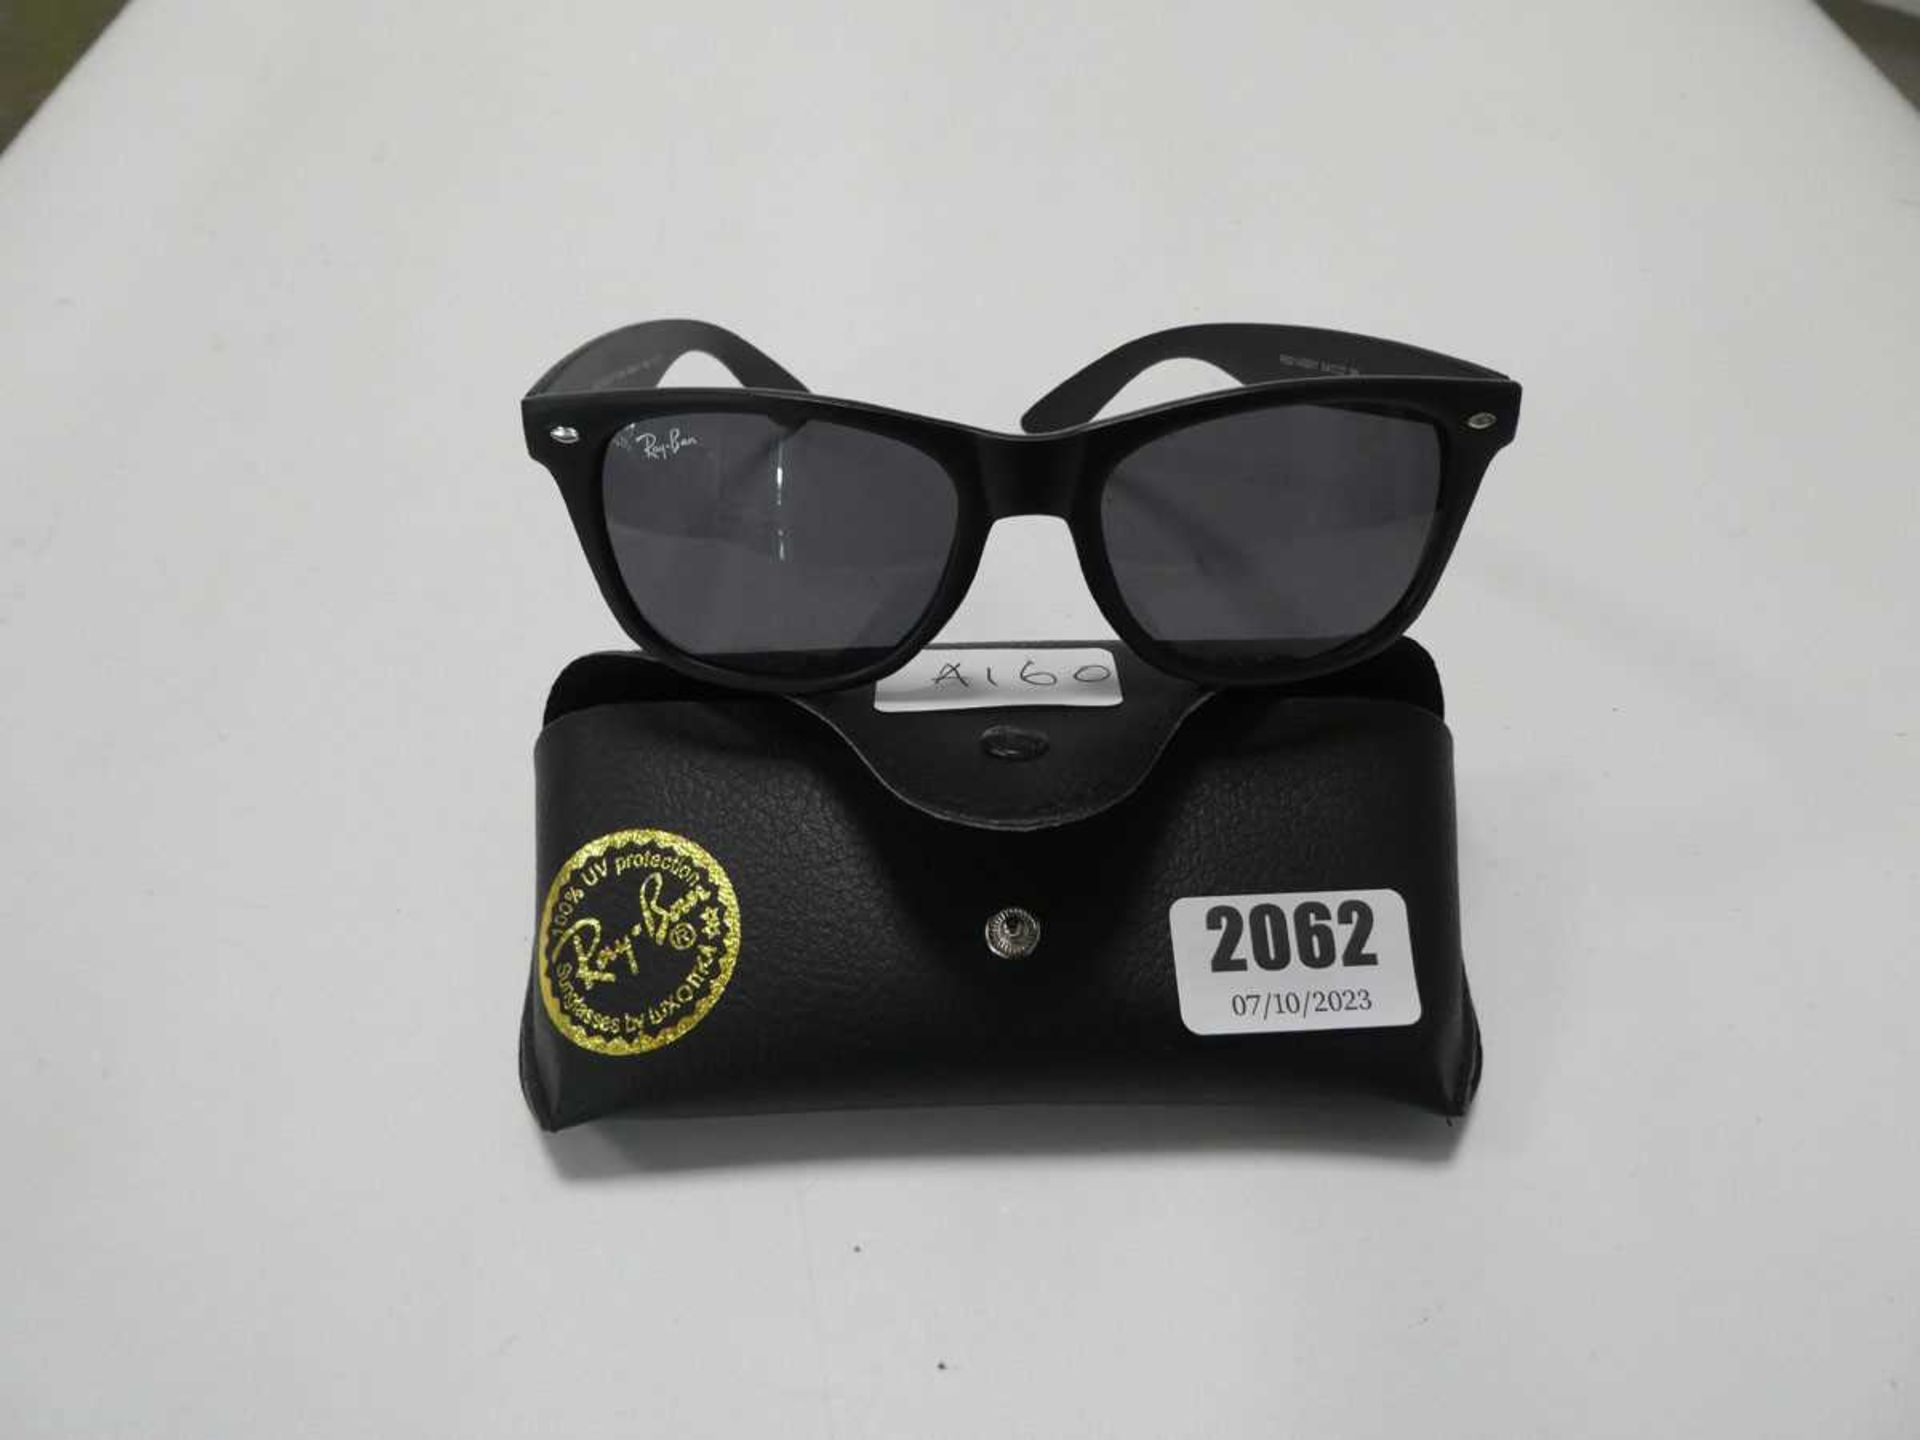 Cased pair of Rayban Wayfarer sunglasses